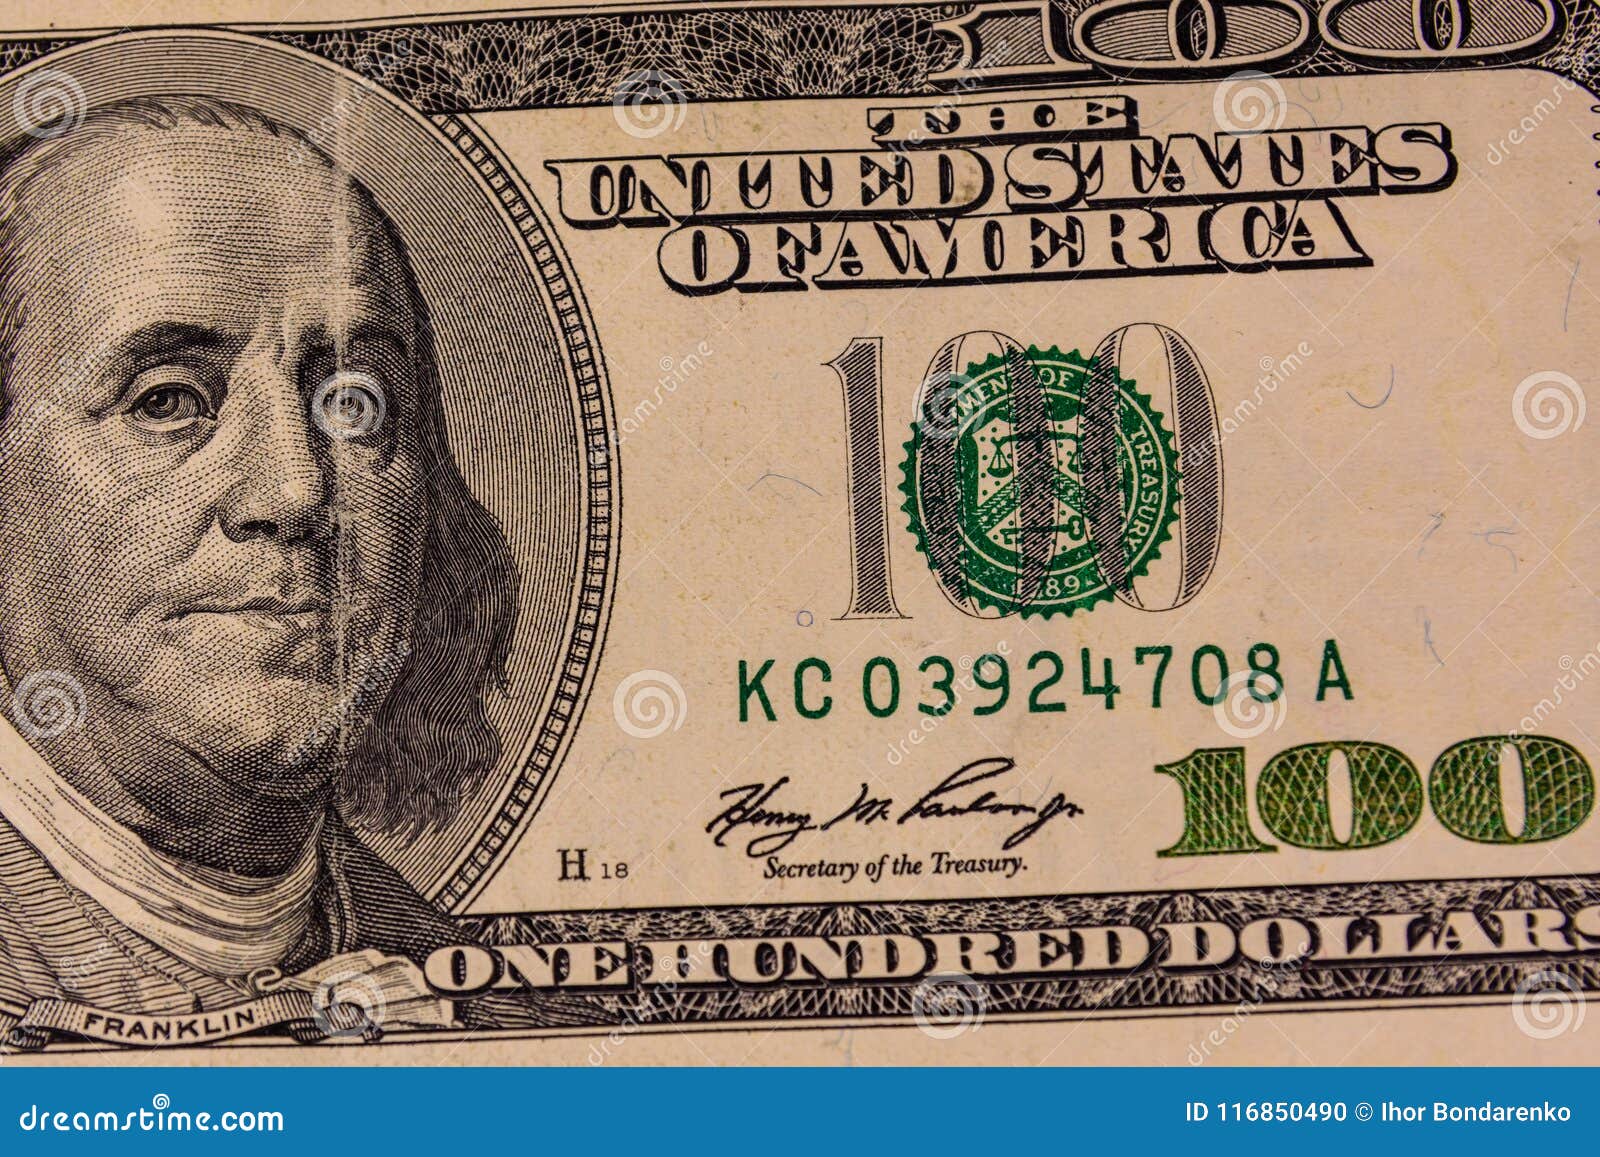 Франклин на какой купюре. Бенджамин Франклин на 100 долларах. Франклин 100 долларов. Франклин на 100 долларовой купюре. Бенджамин Франклин фото на 100 долларах.